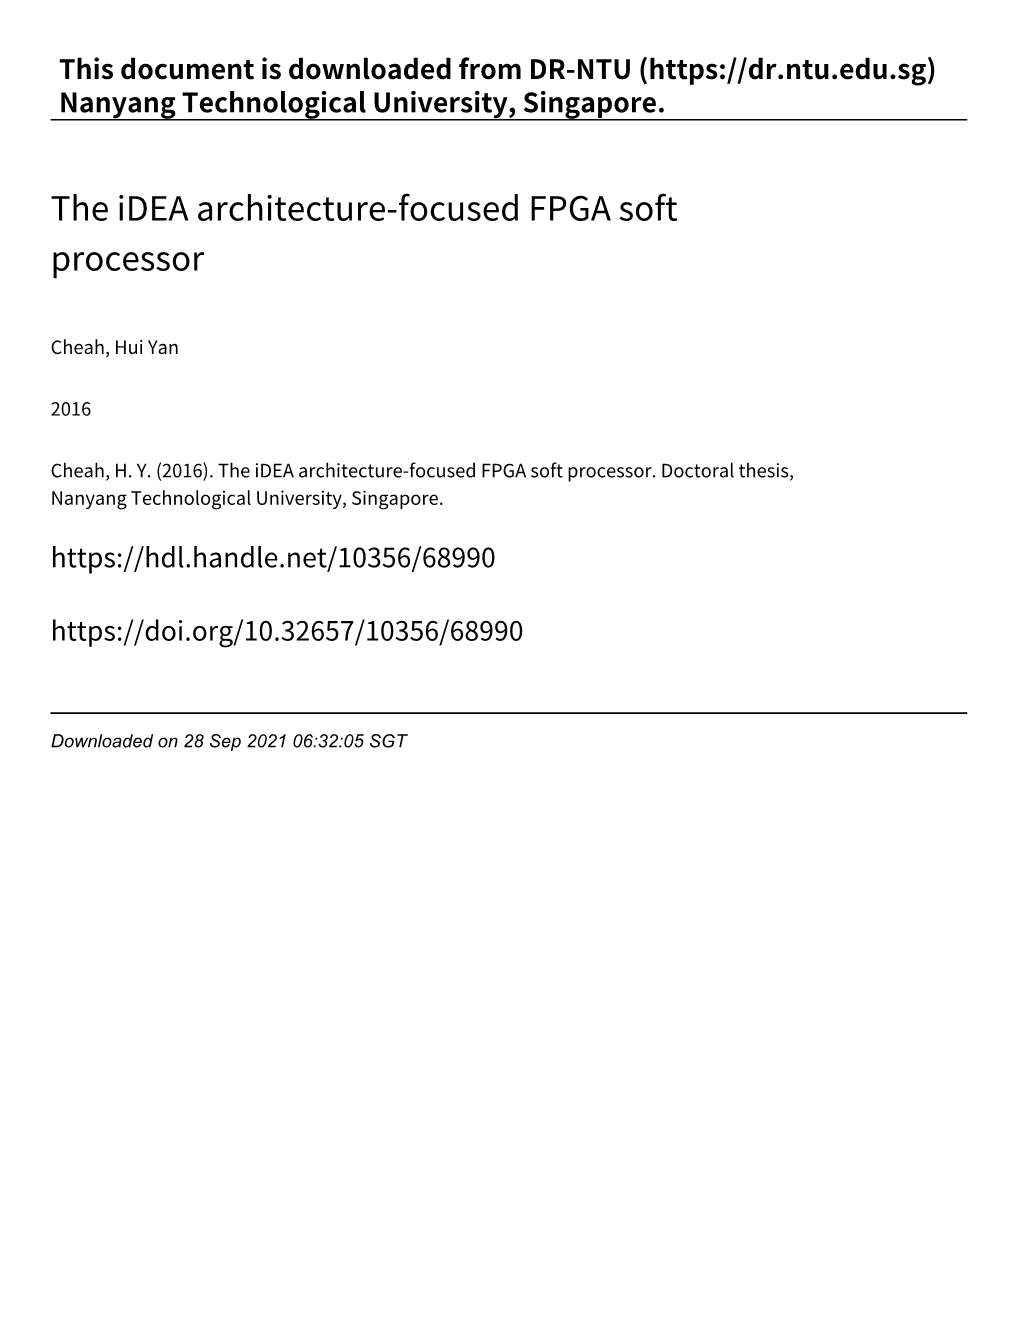 The Idea Architecture‑Focused FPGA Soft Processor